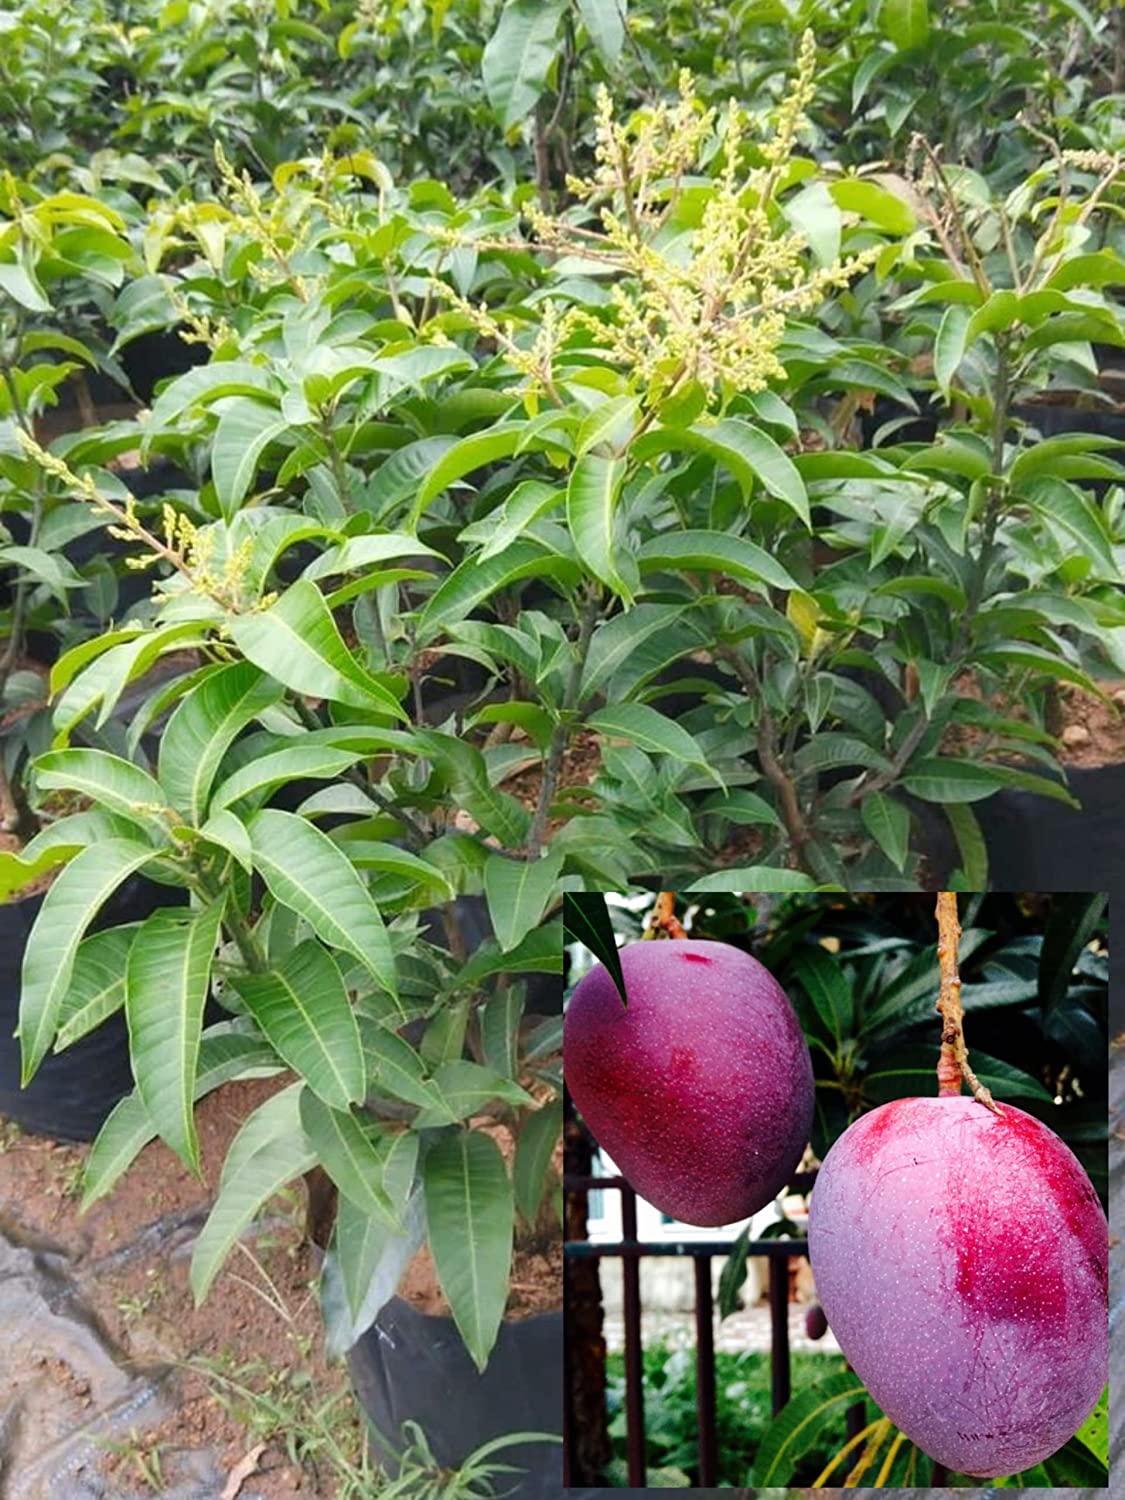 native earth nursery " thai all time mango " hybrid healthy baramasi mango fruit plant (grafted plant, 2 3 feet height) live plant for home garden